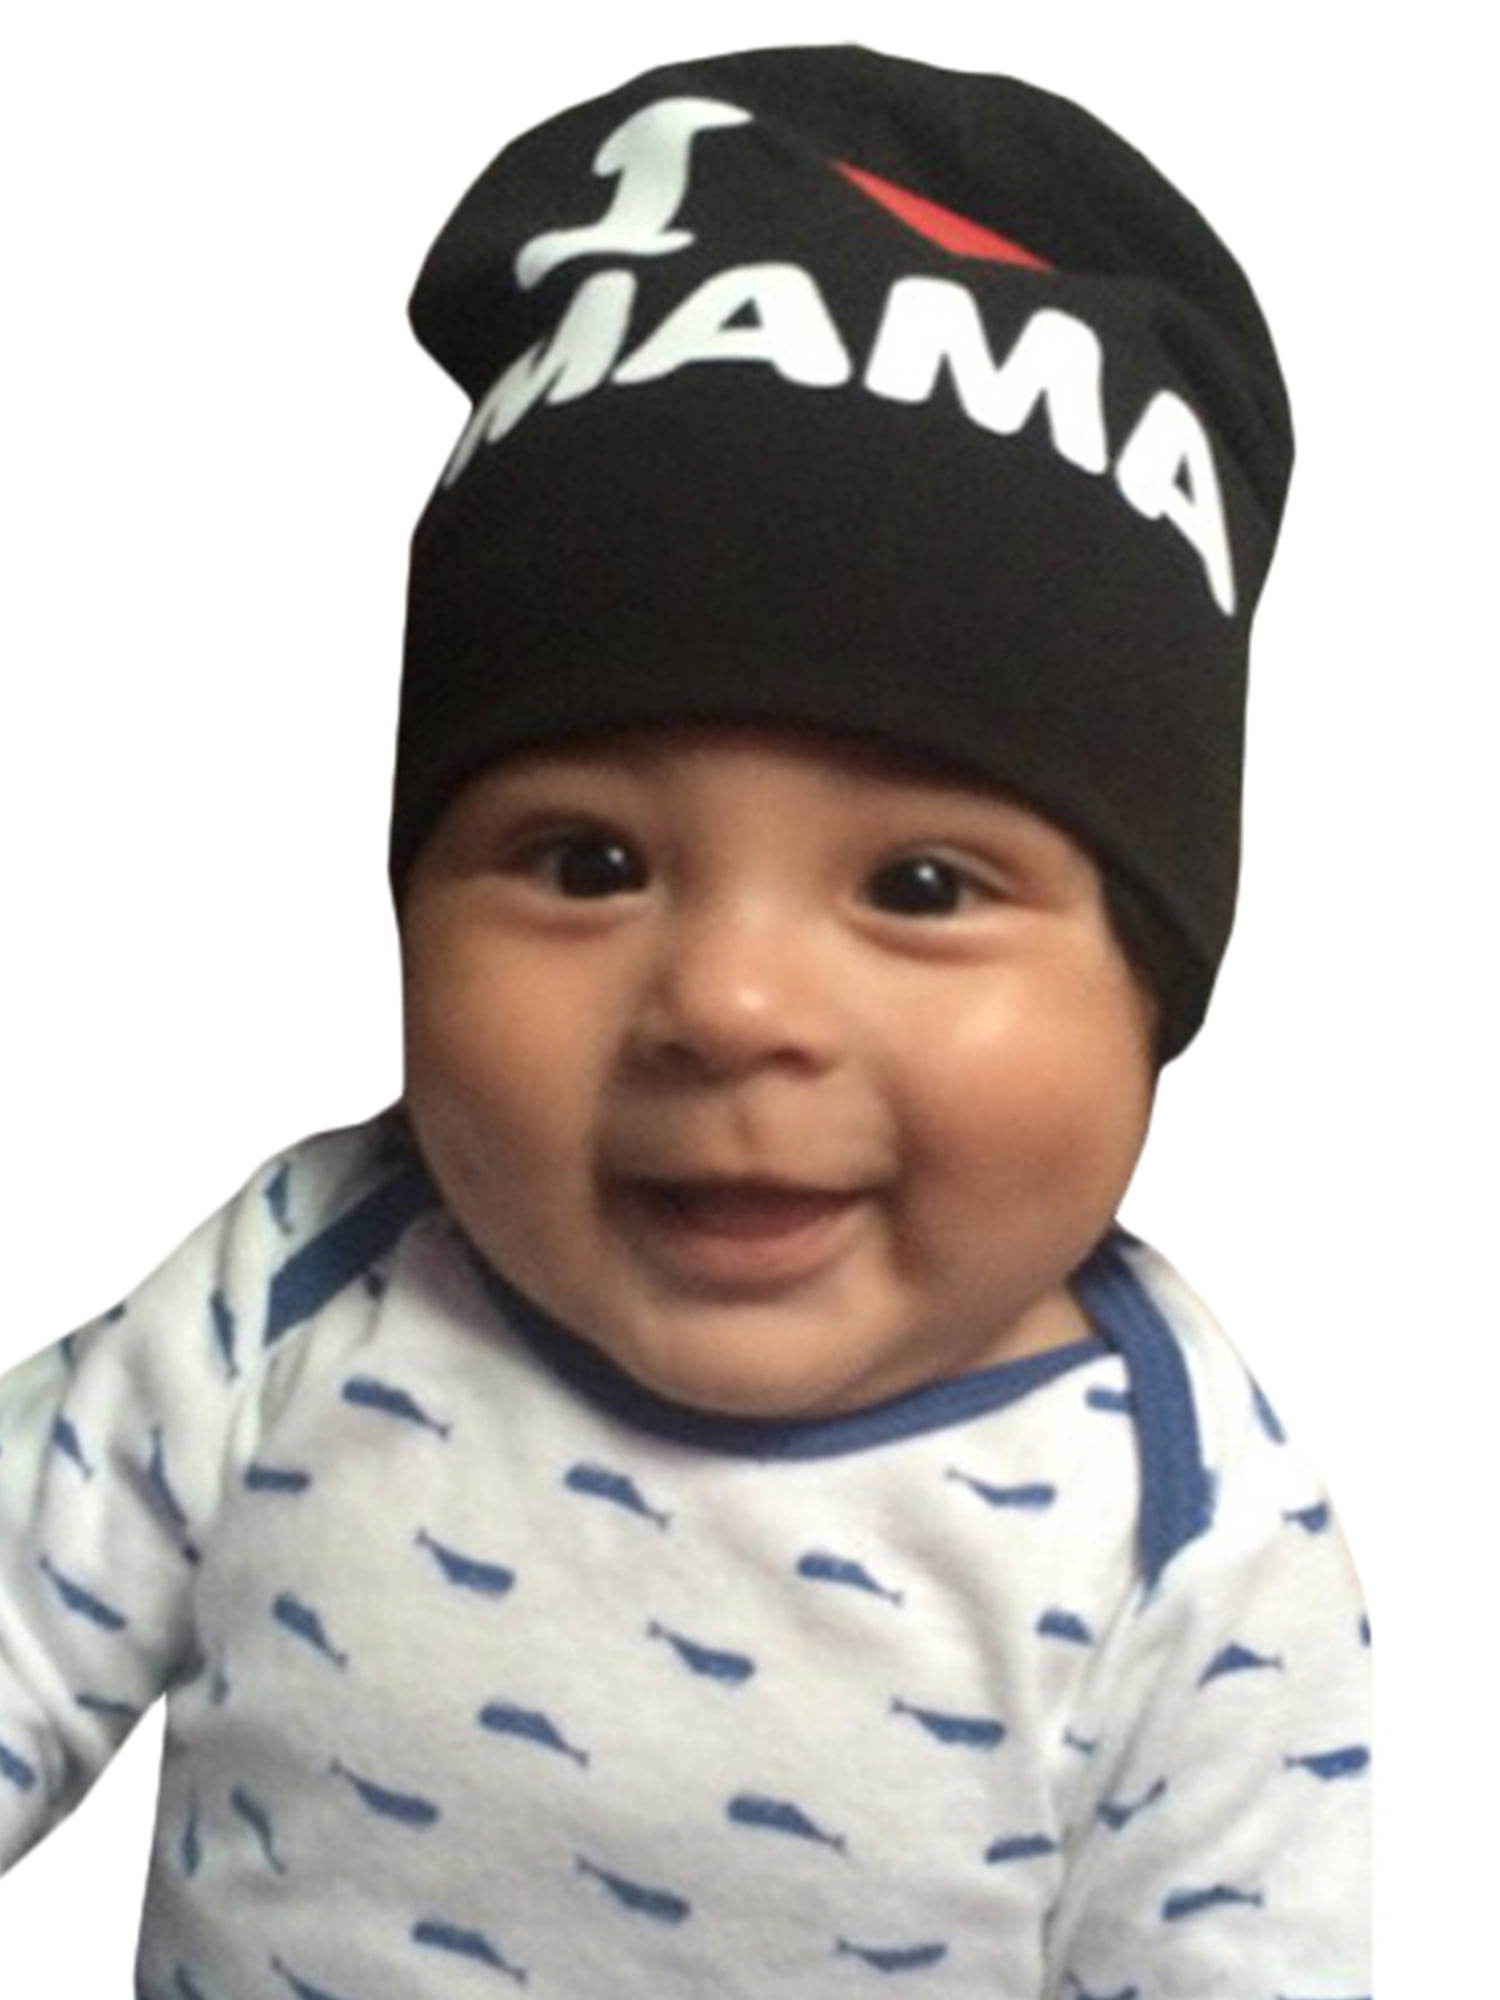 2018 Newborn Baby Kid Boy Girl Infant Bowknot Hat Toddler Cotton Beanie Hat Cap